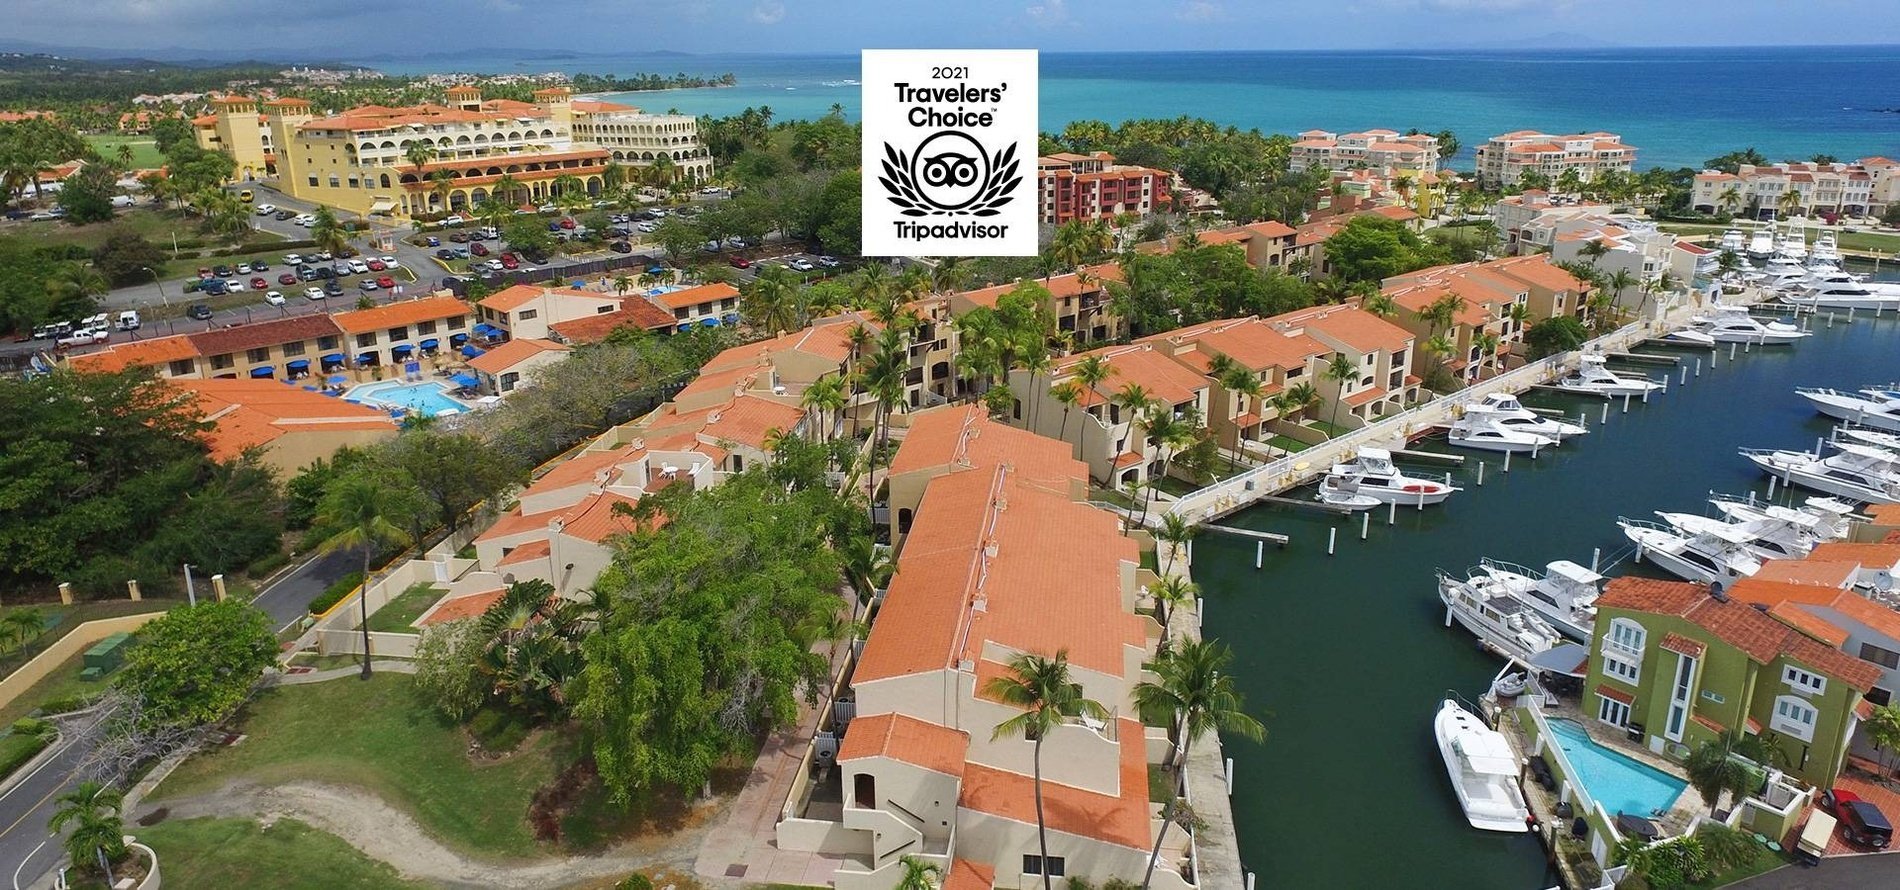 TripAdvisor Travelers Choice Award 2021 to Park Royal Hotels & Resorts Puerto Rico